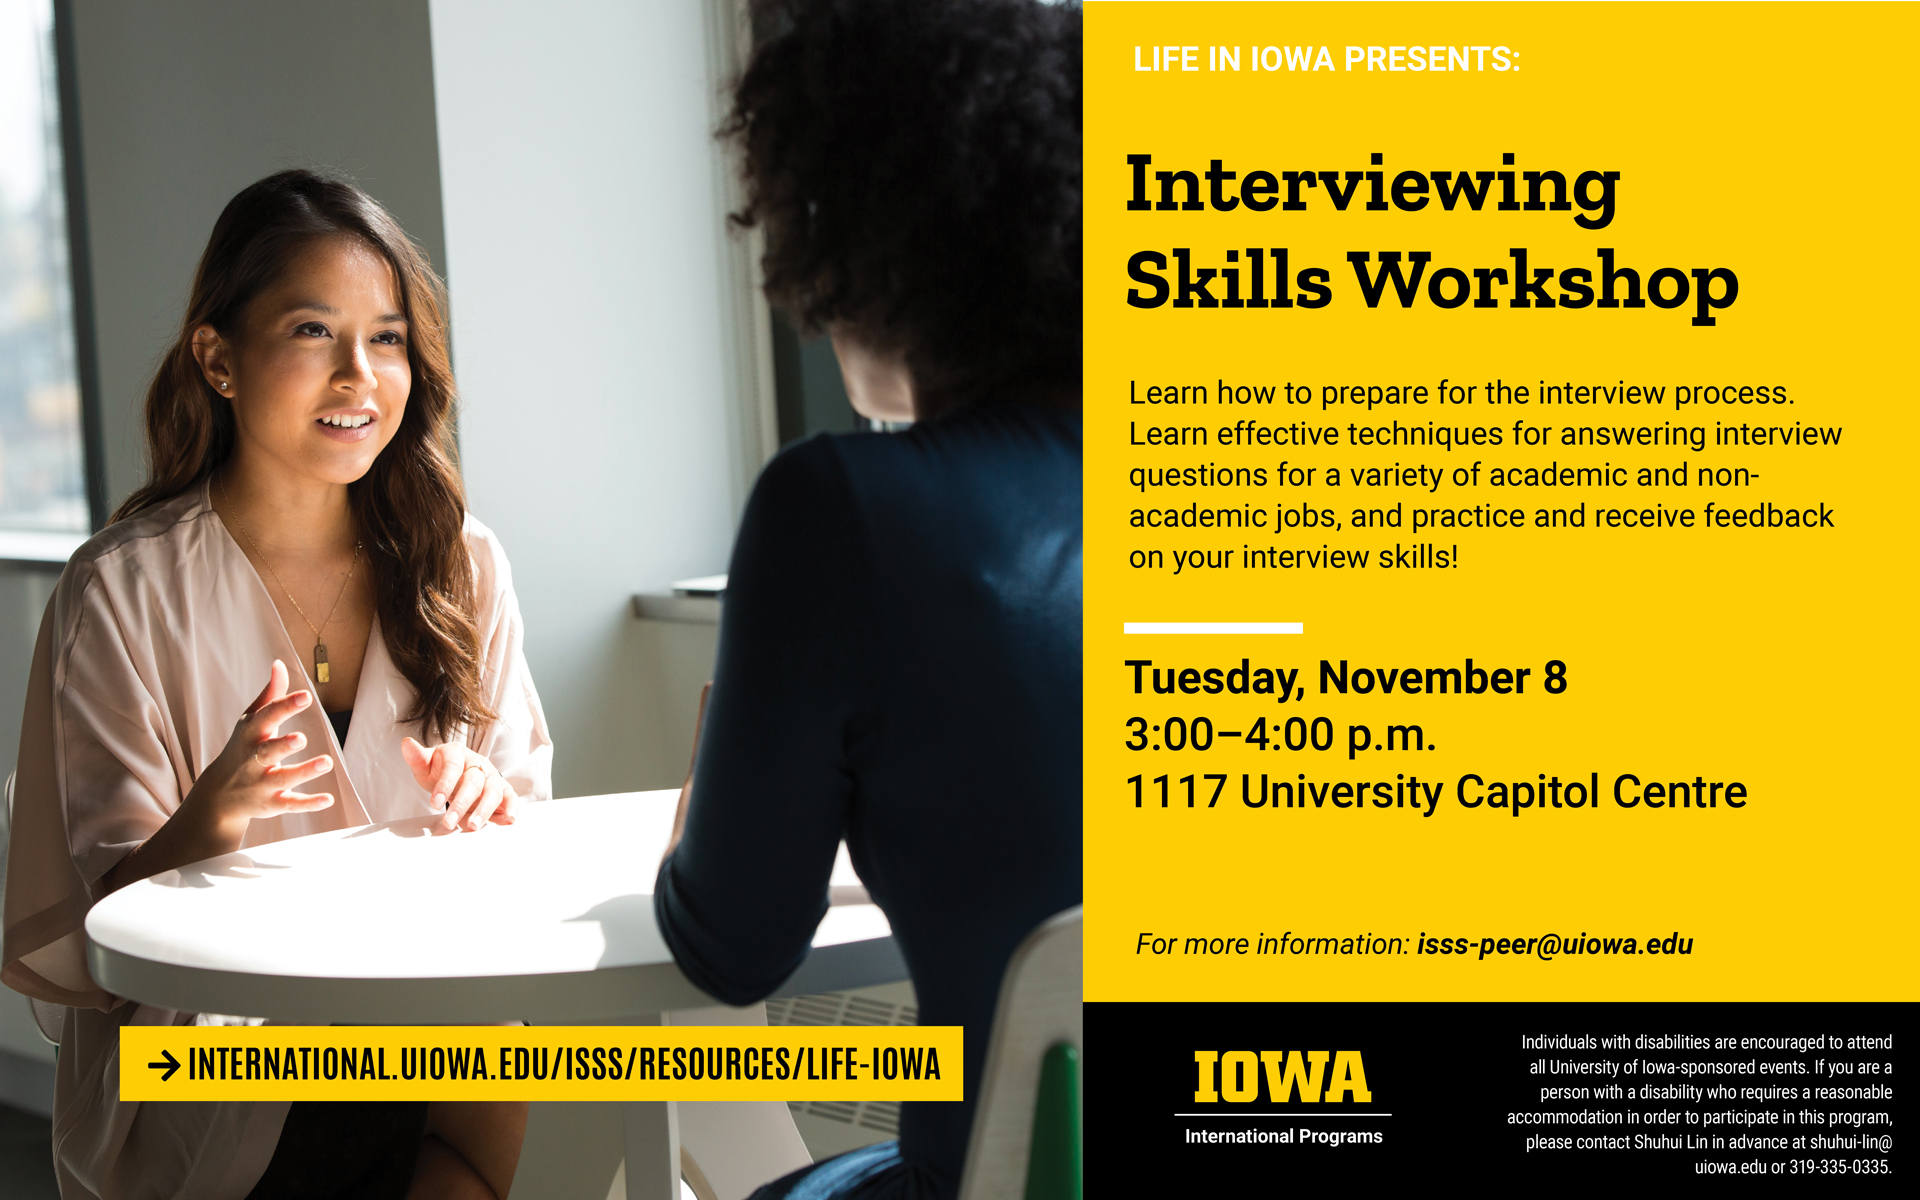 Interviewing Skills Workshop, Tuesday, Nov. 8, 3-4pm